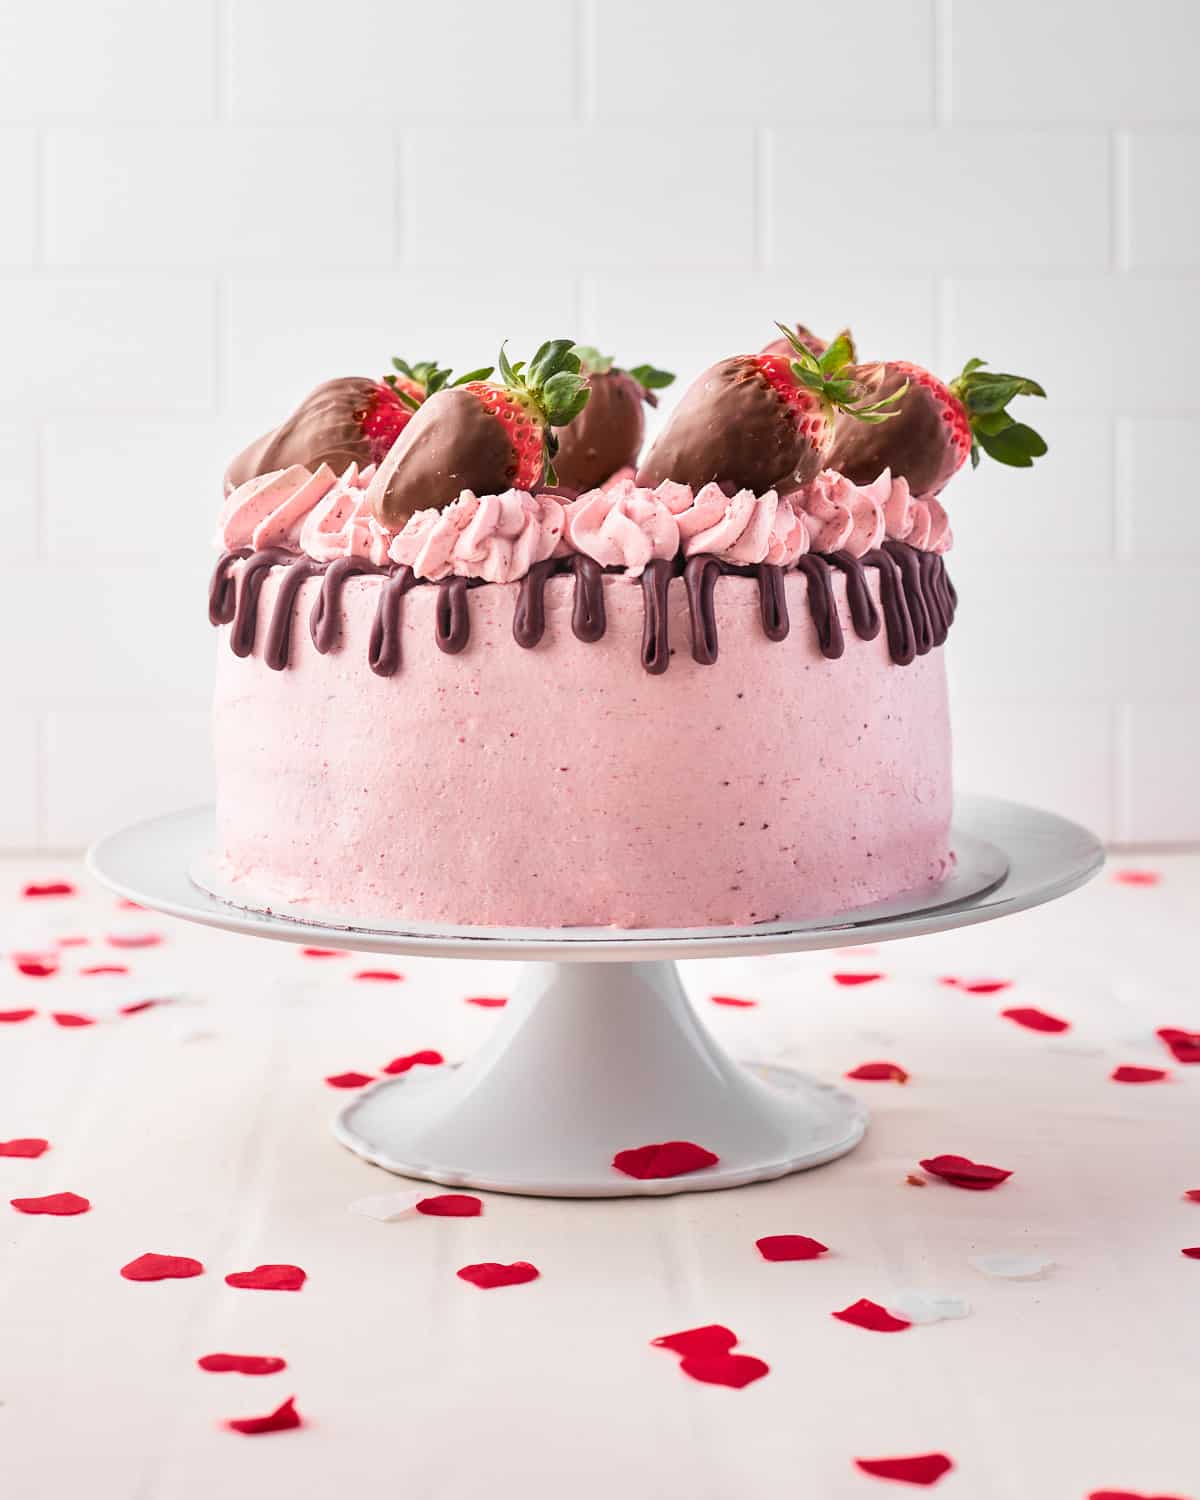 chocolate strawberry cake with chocolate drip and chocolate covered strawberries.